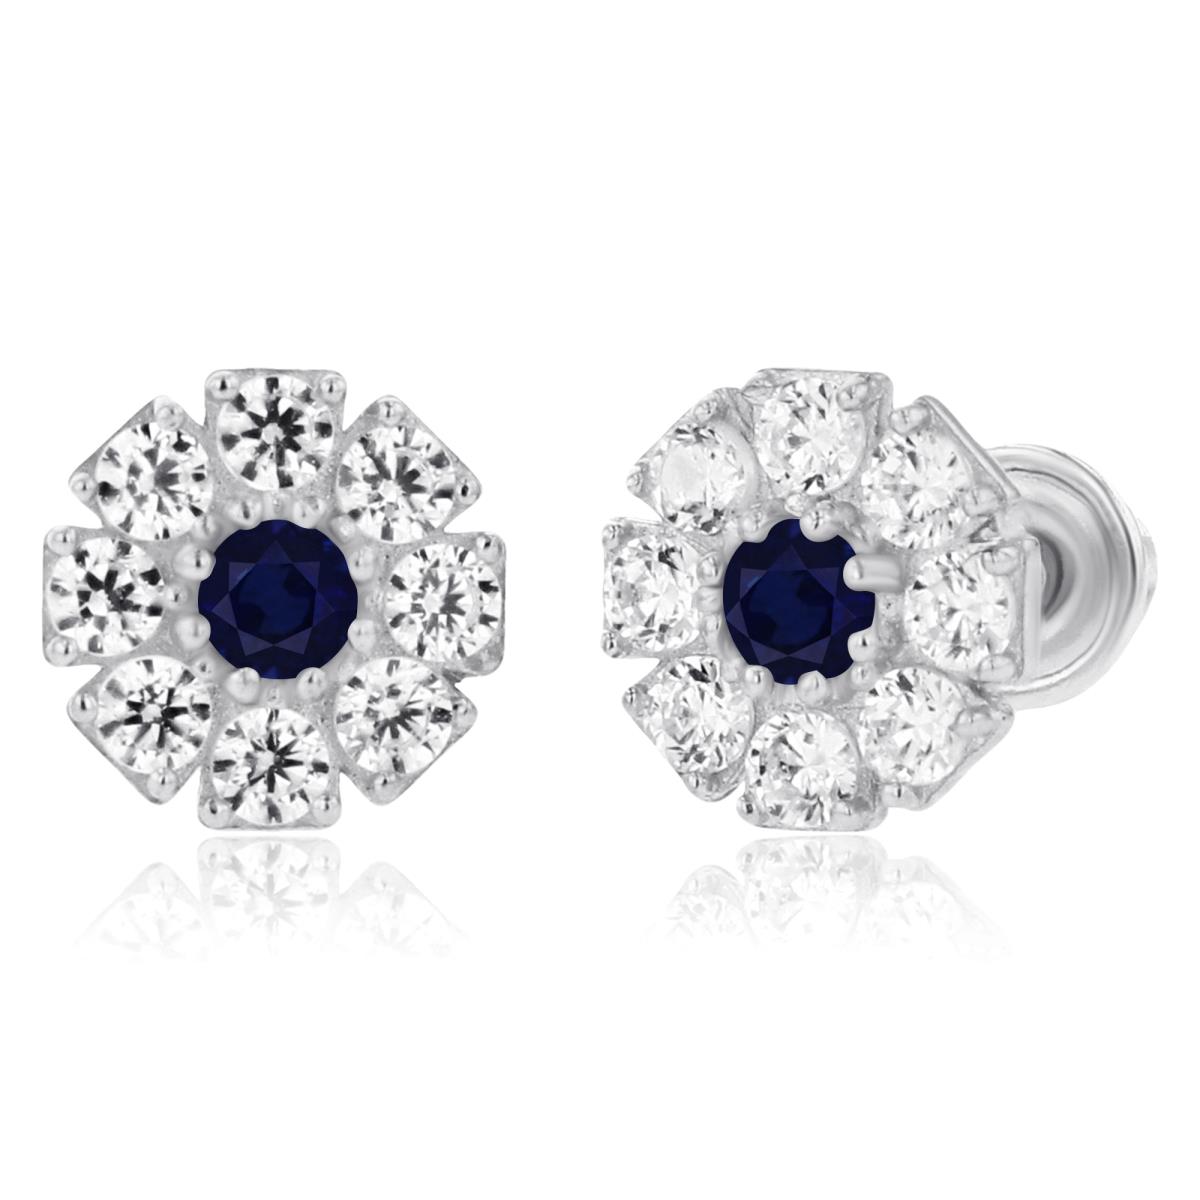 14K White Gold 2mm Round Sapphire & 1.5mm Created White Sapphire Flower Screwback Earrings